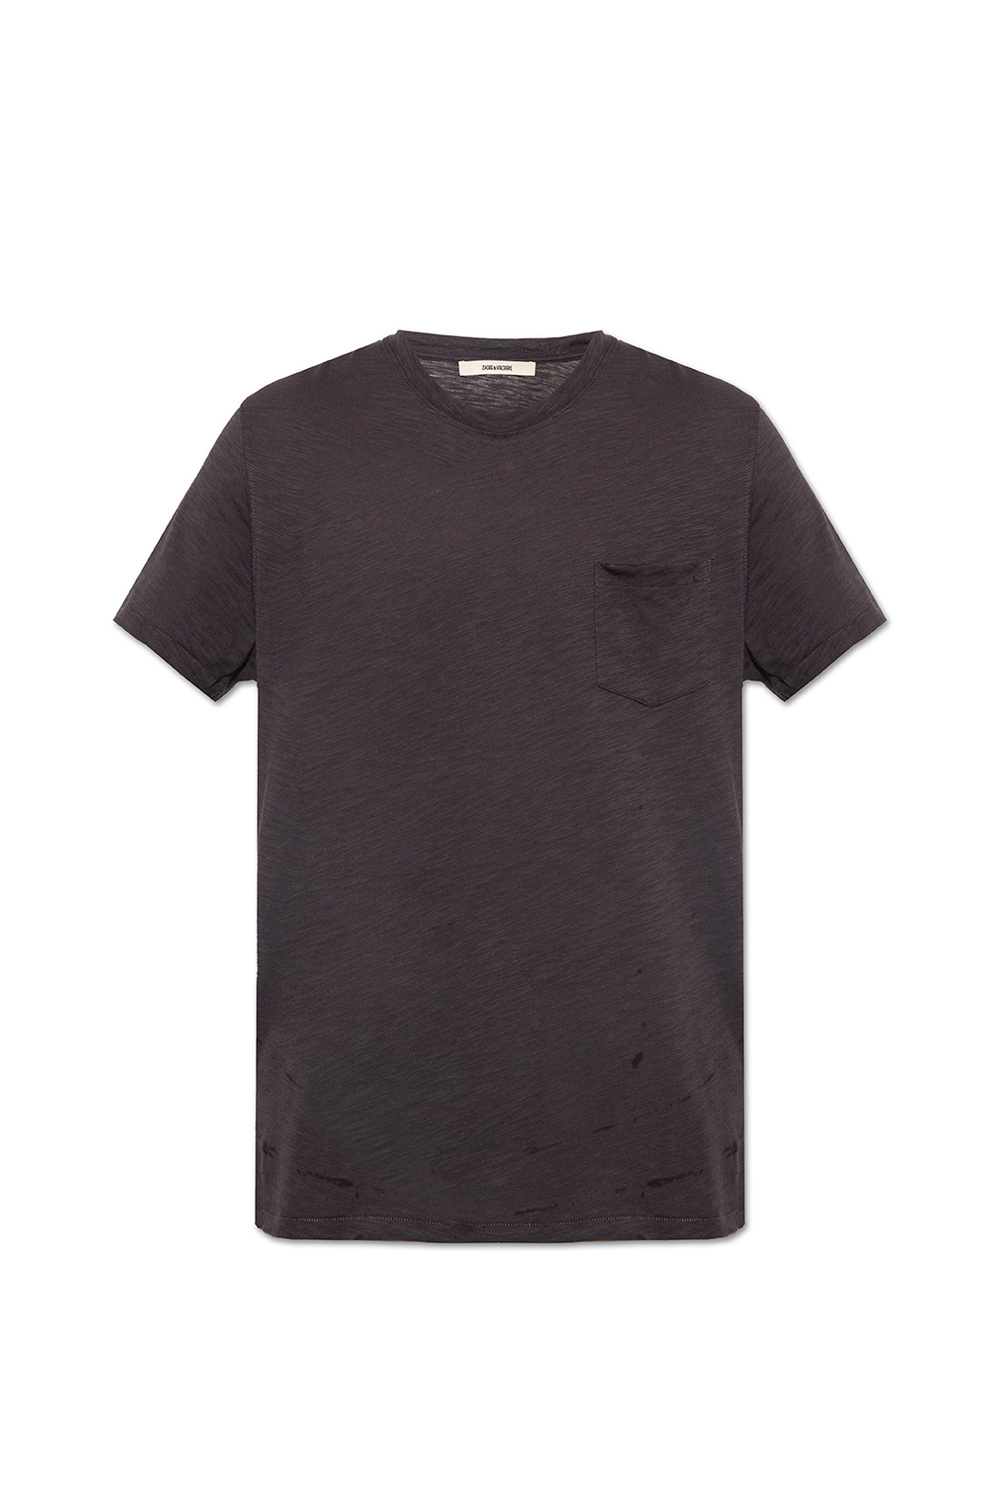 IetpShops - Men's Clothing, shirt